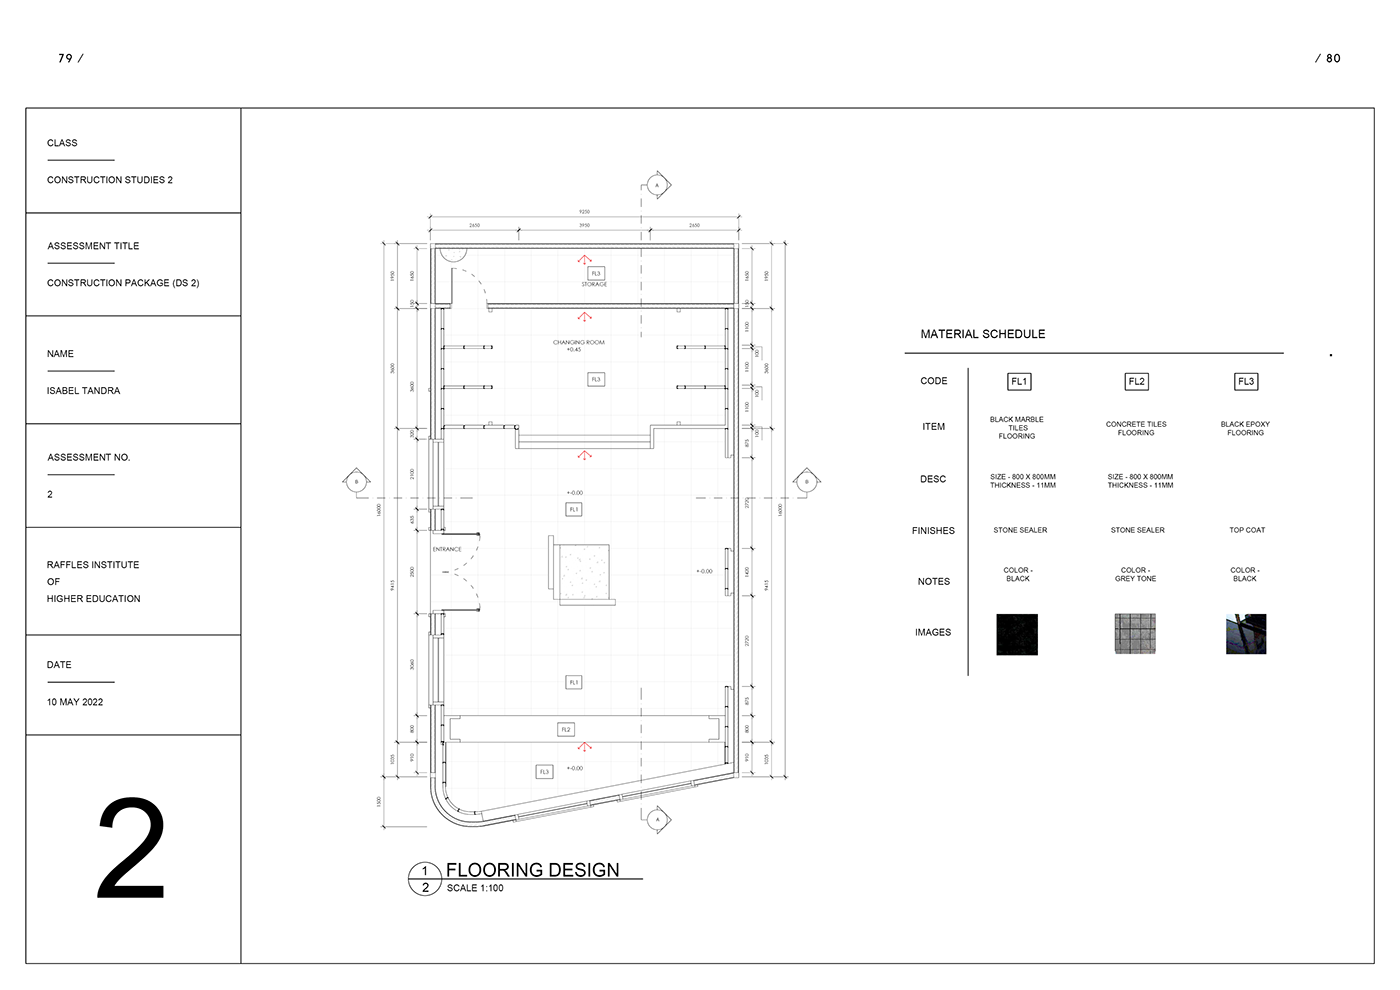 interior design  Interior Architecture design 3D SketchUP visualization Render Interior vray render